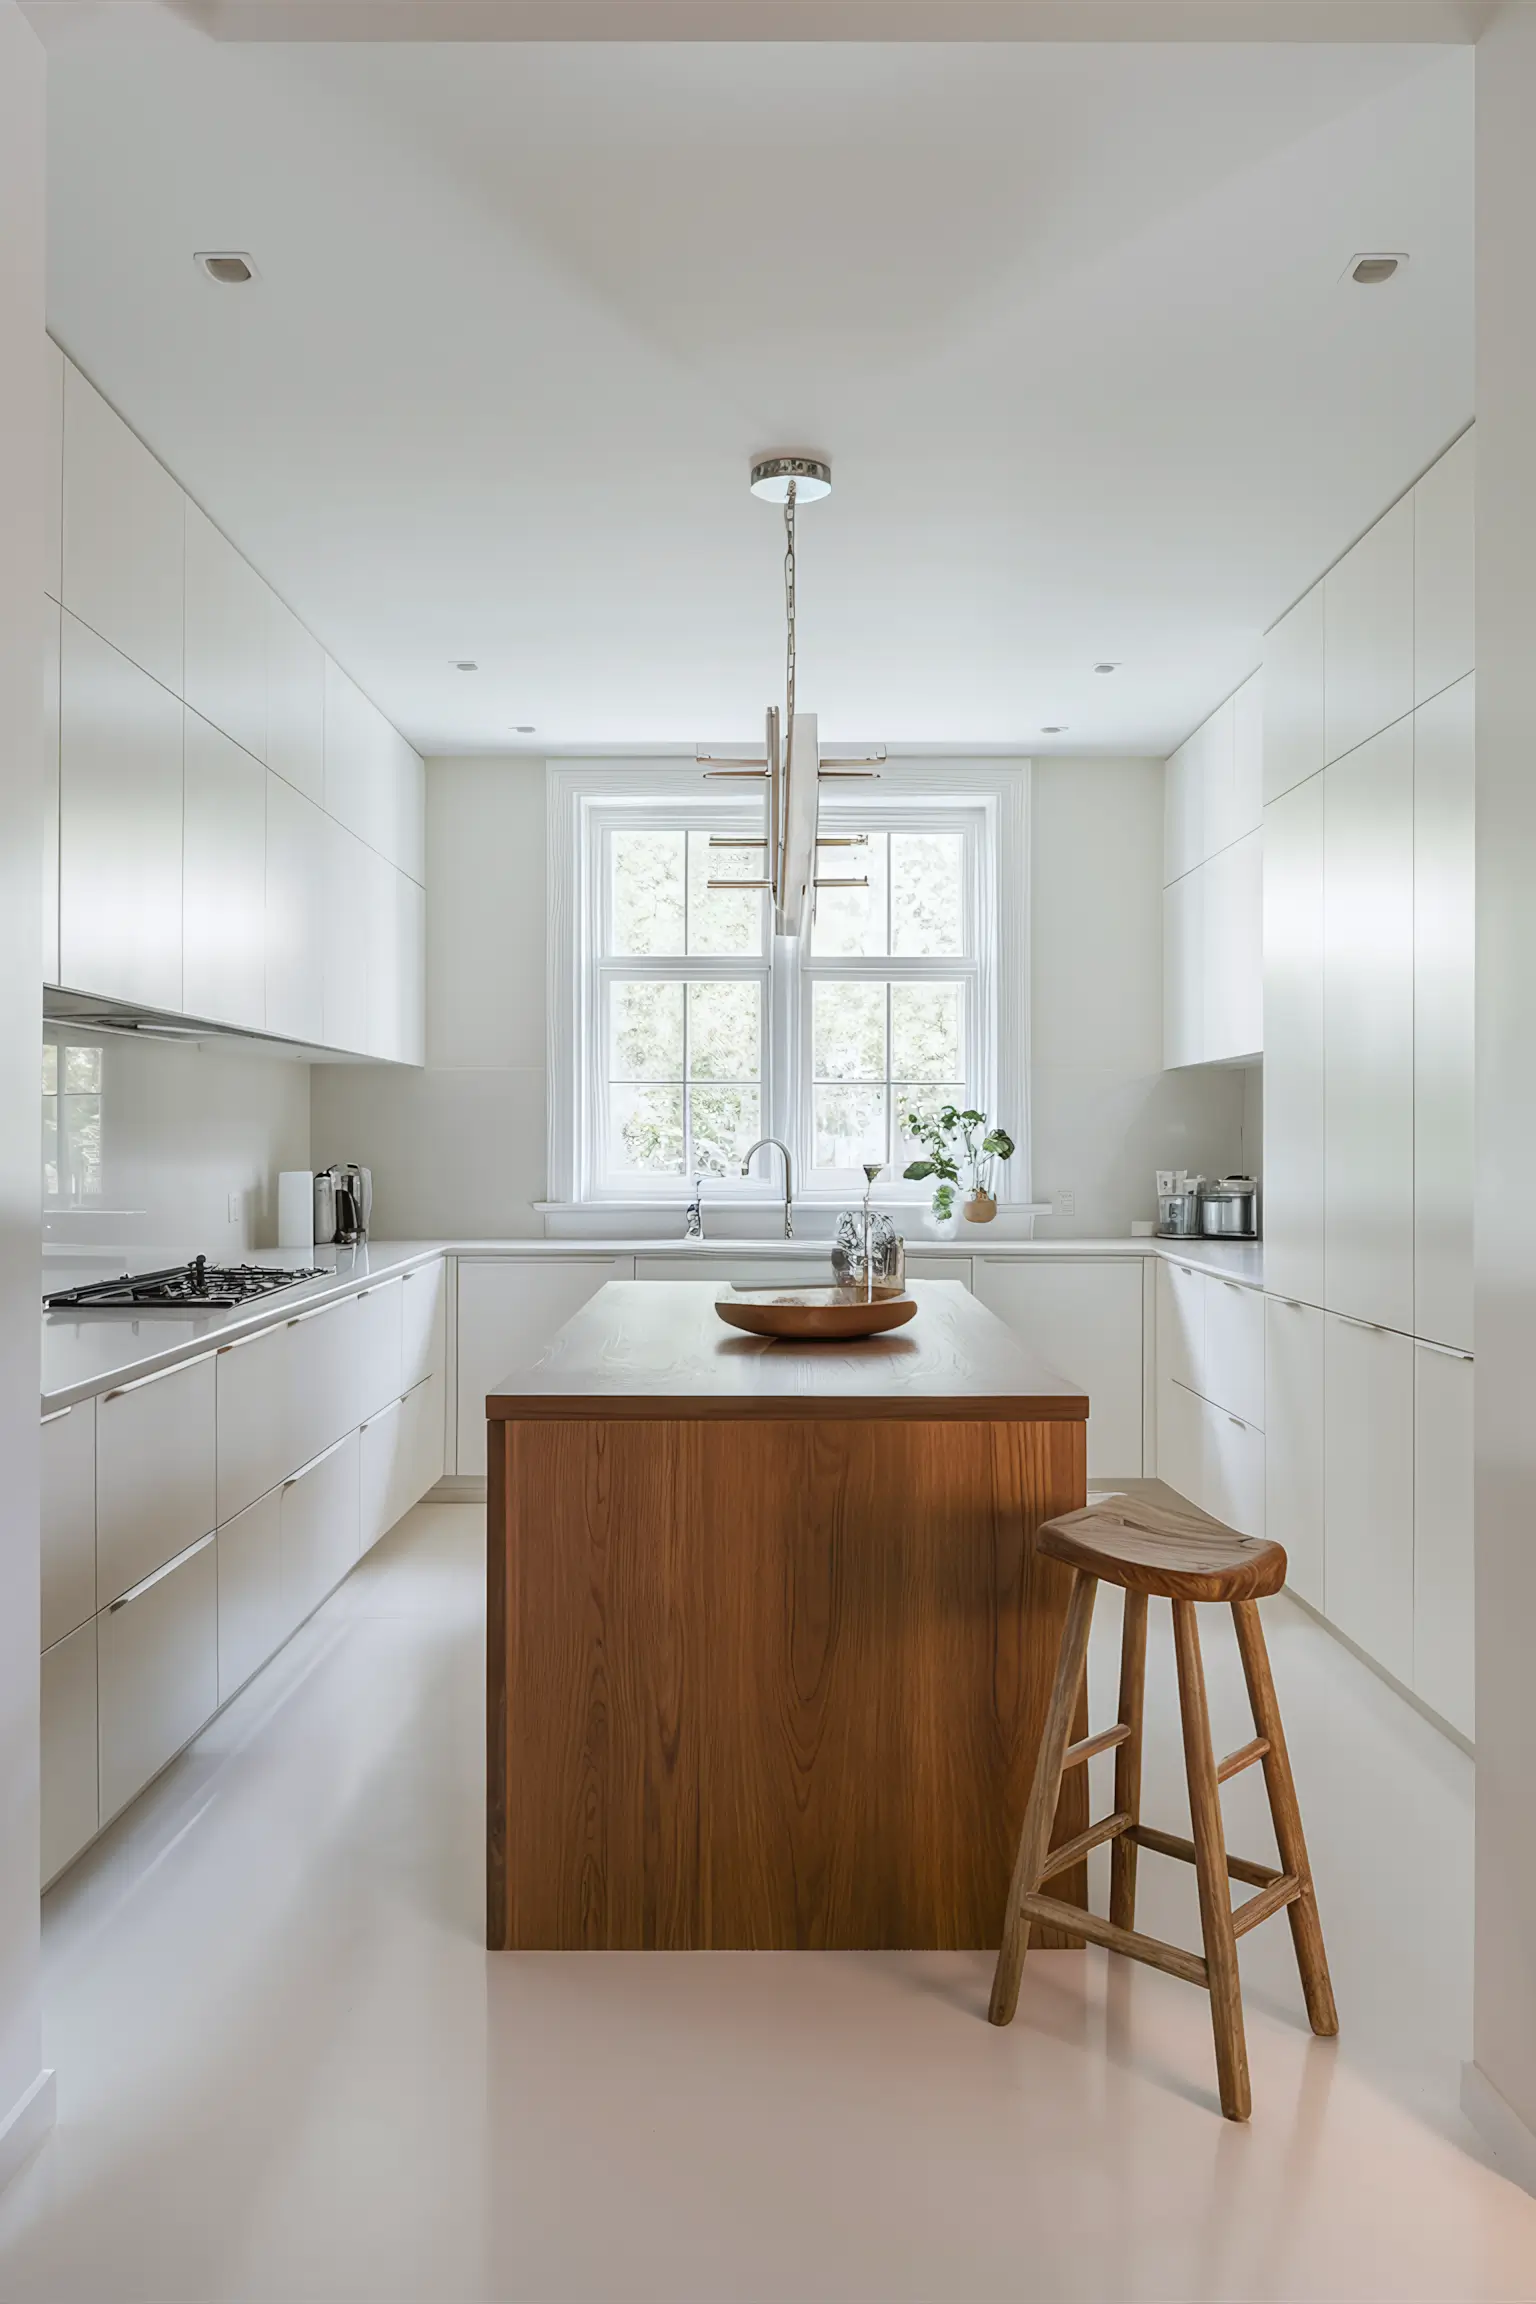 Minimalistic white kitchen with a warm oak island.